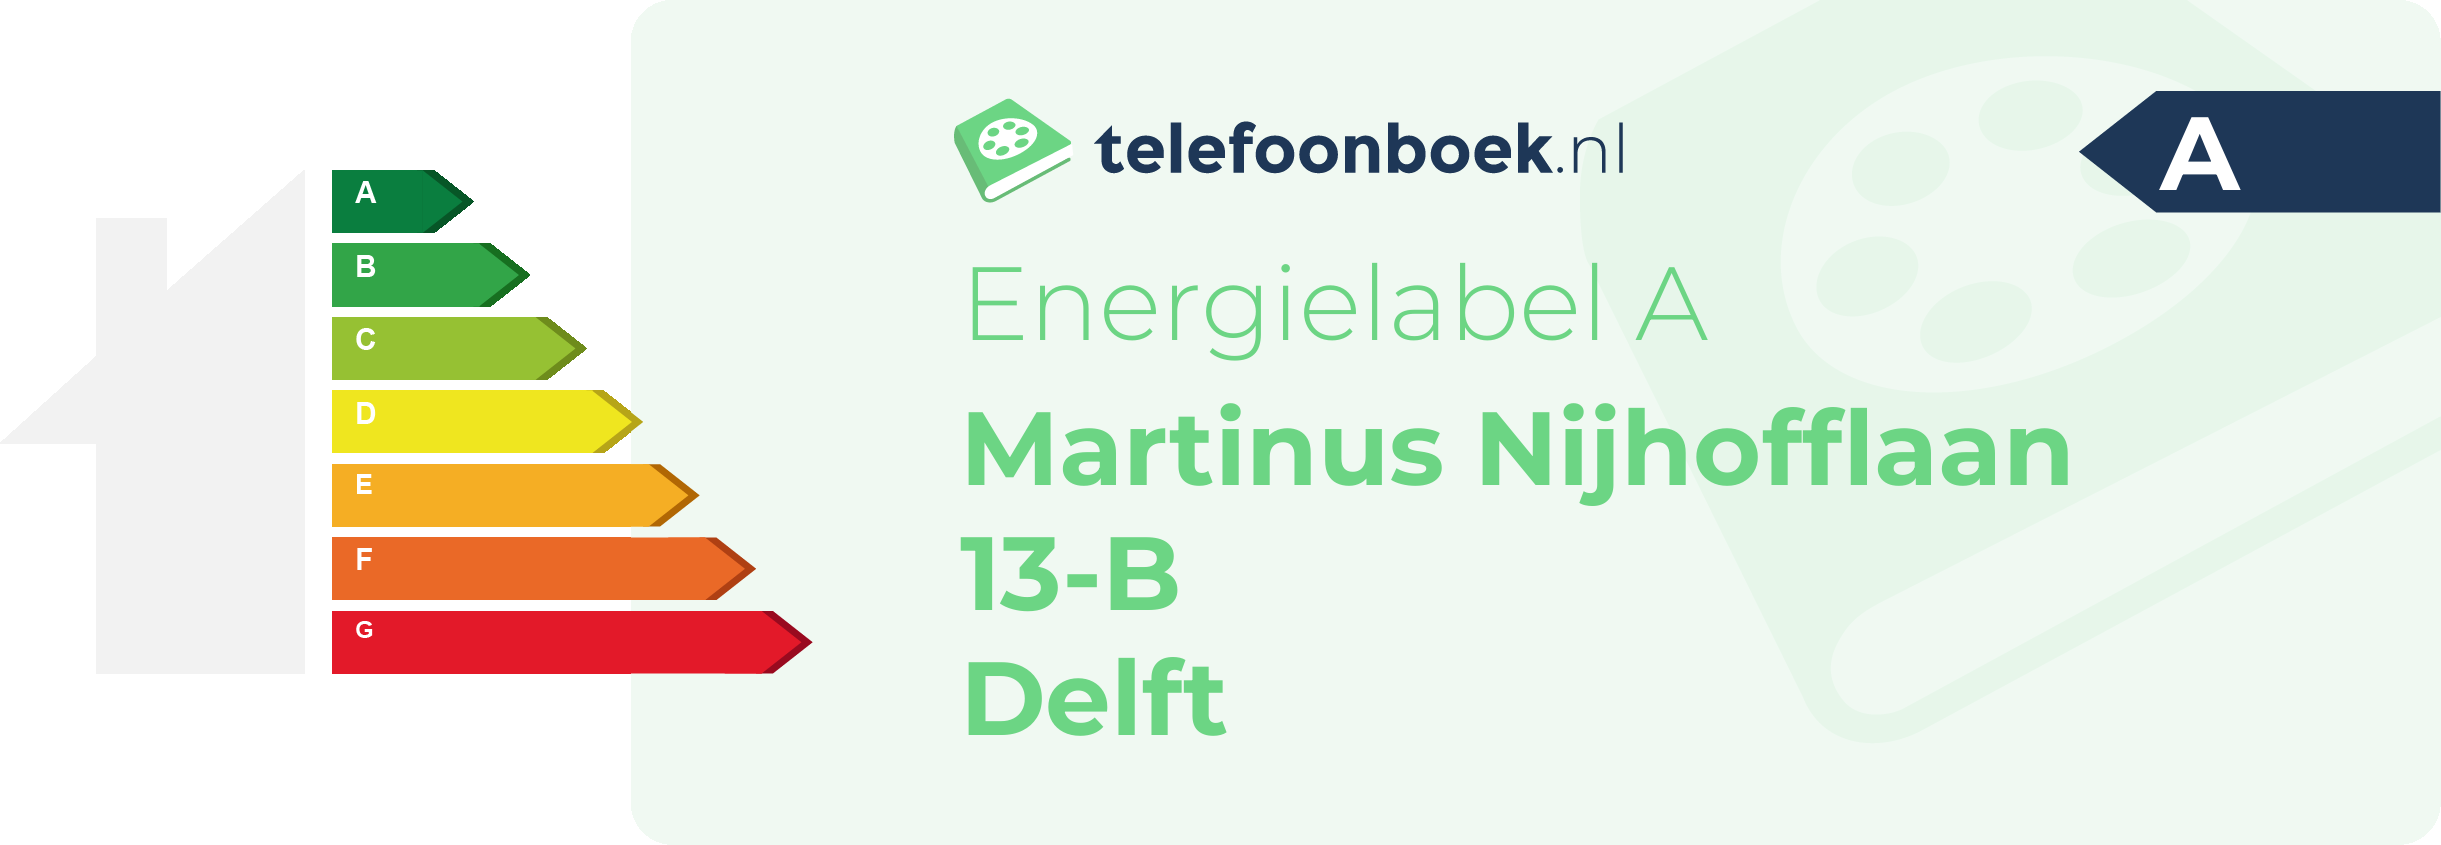 Energielabel Martinus Nijhofflaan 13-B Delft